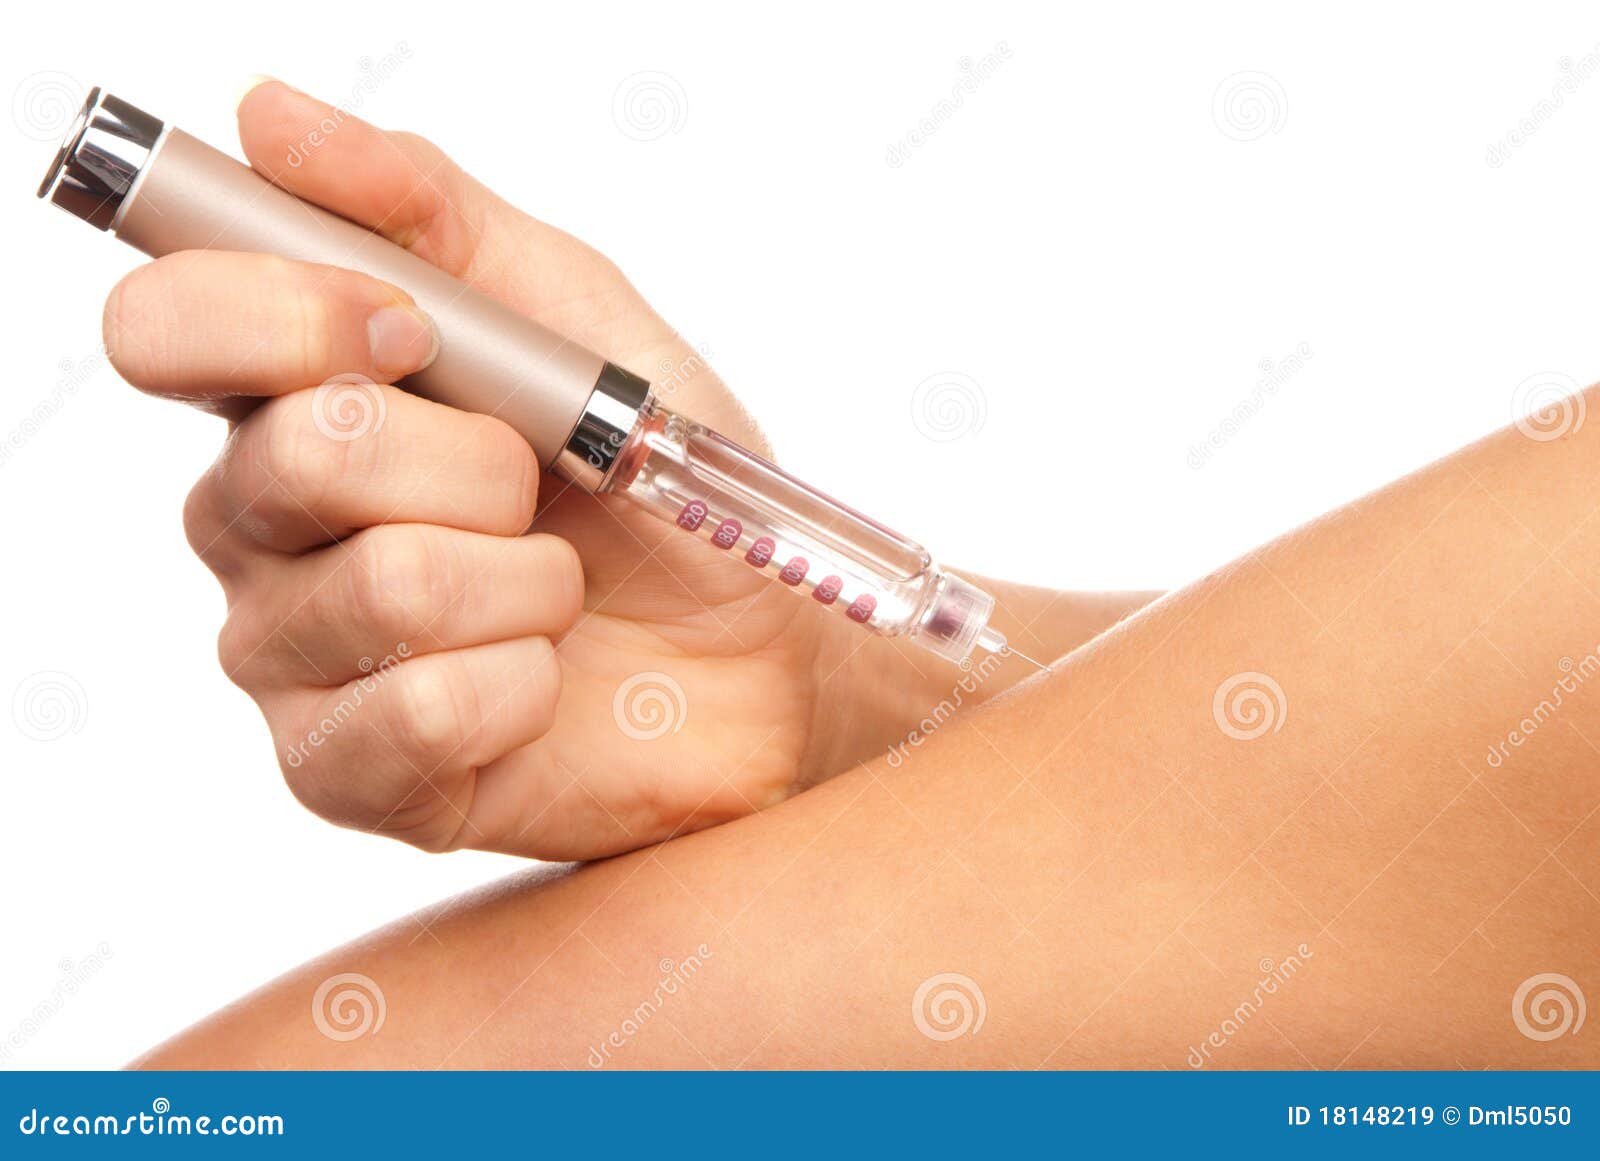 doctor hand injecting medical insulin syringe pen